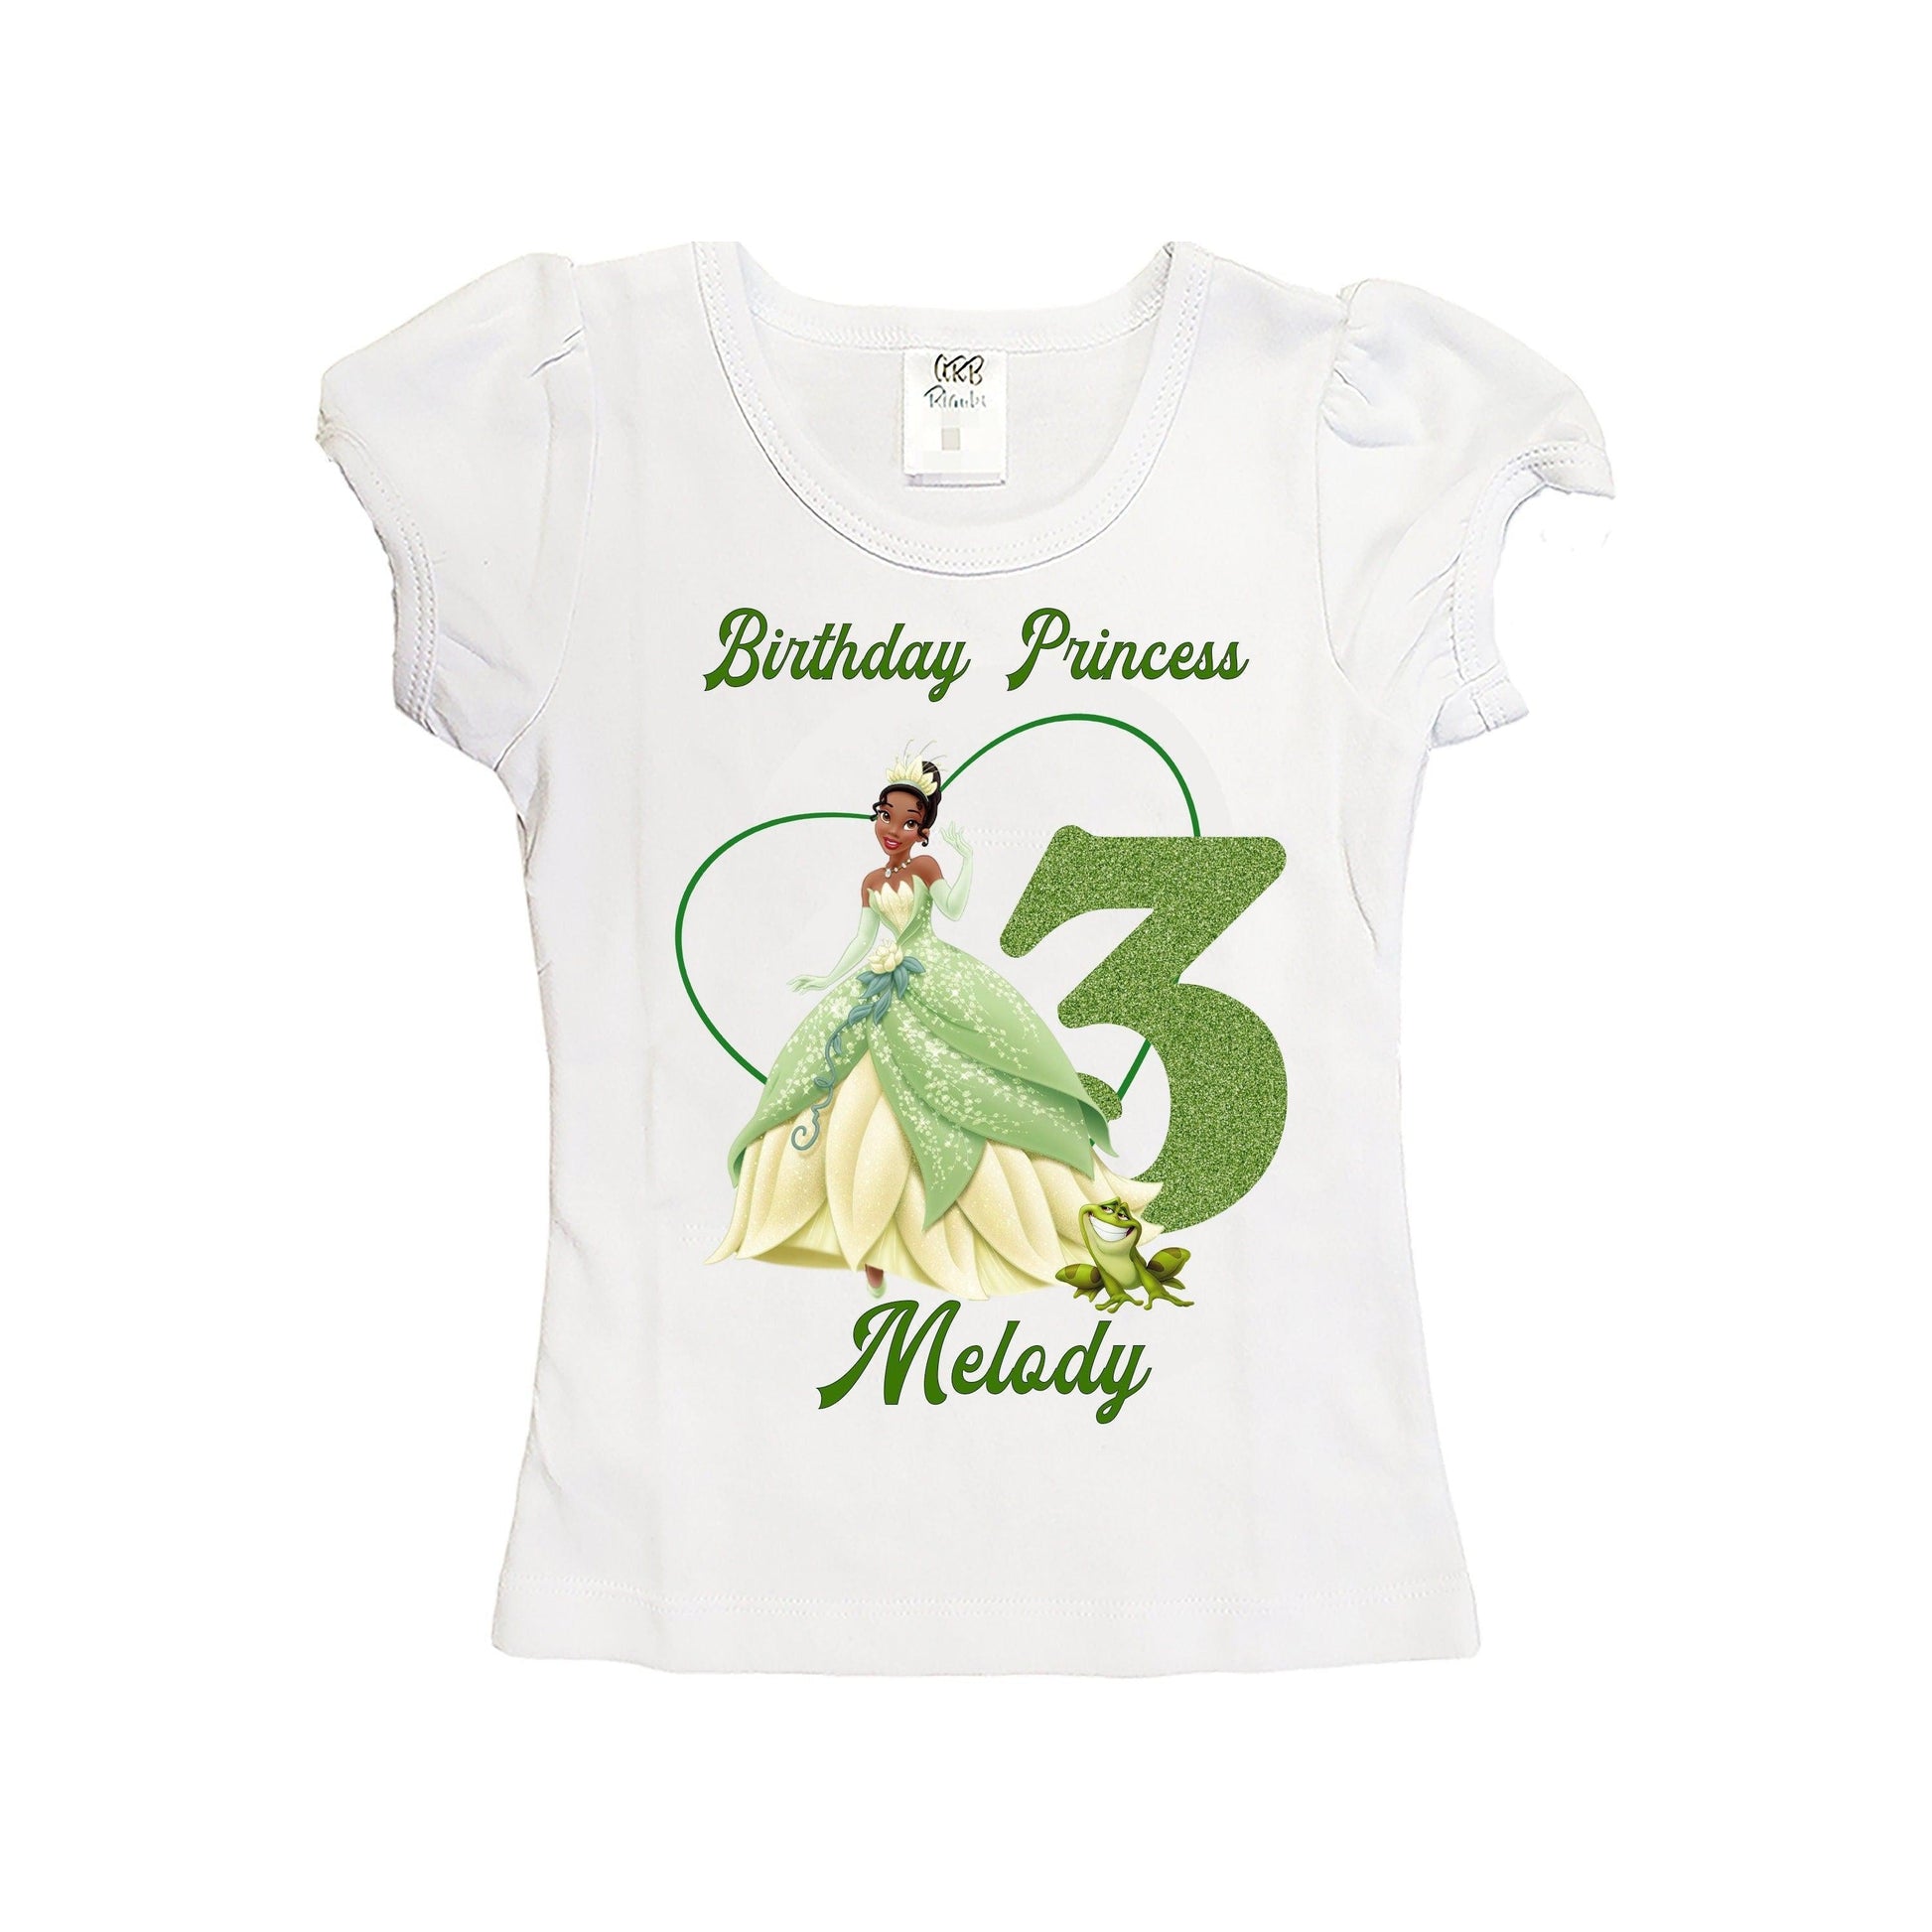 Princess Tiana Birthday shirts